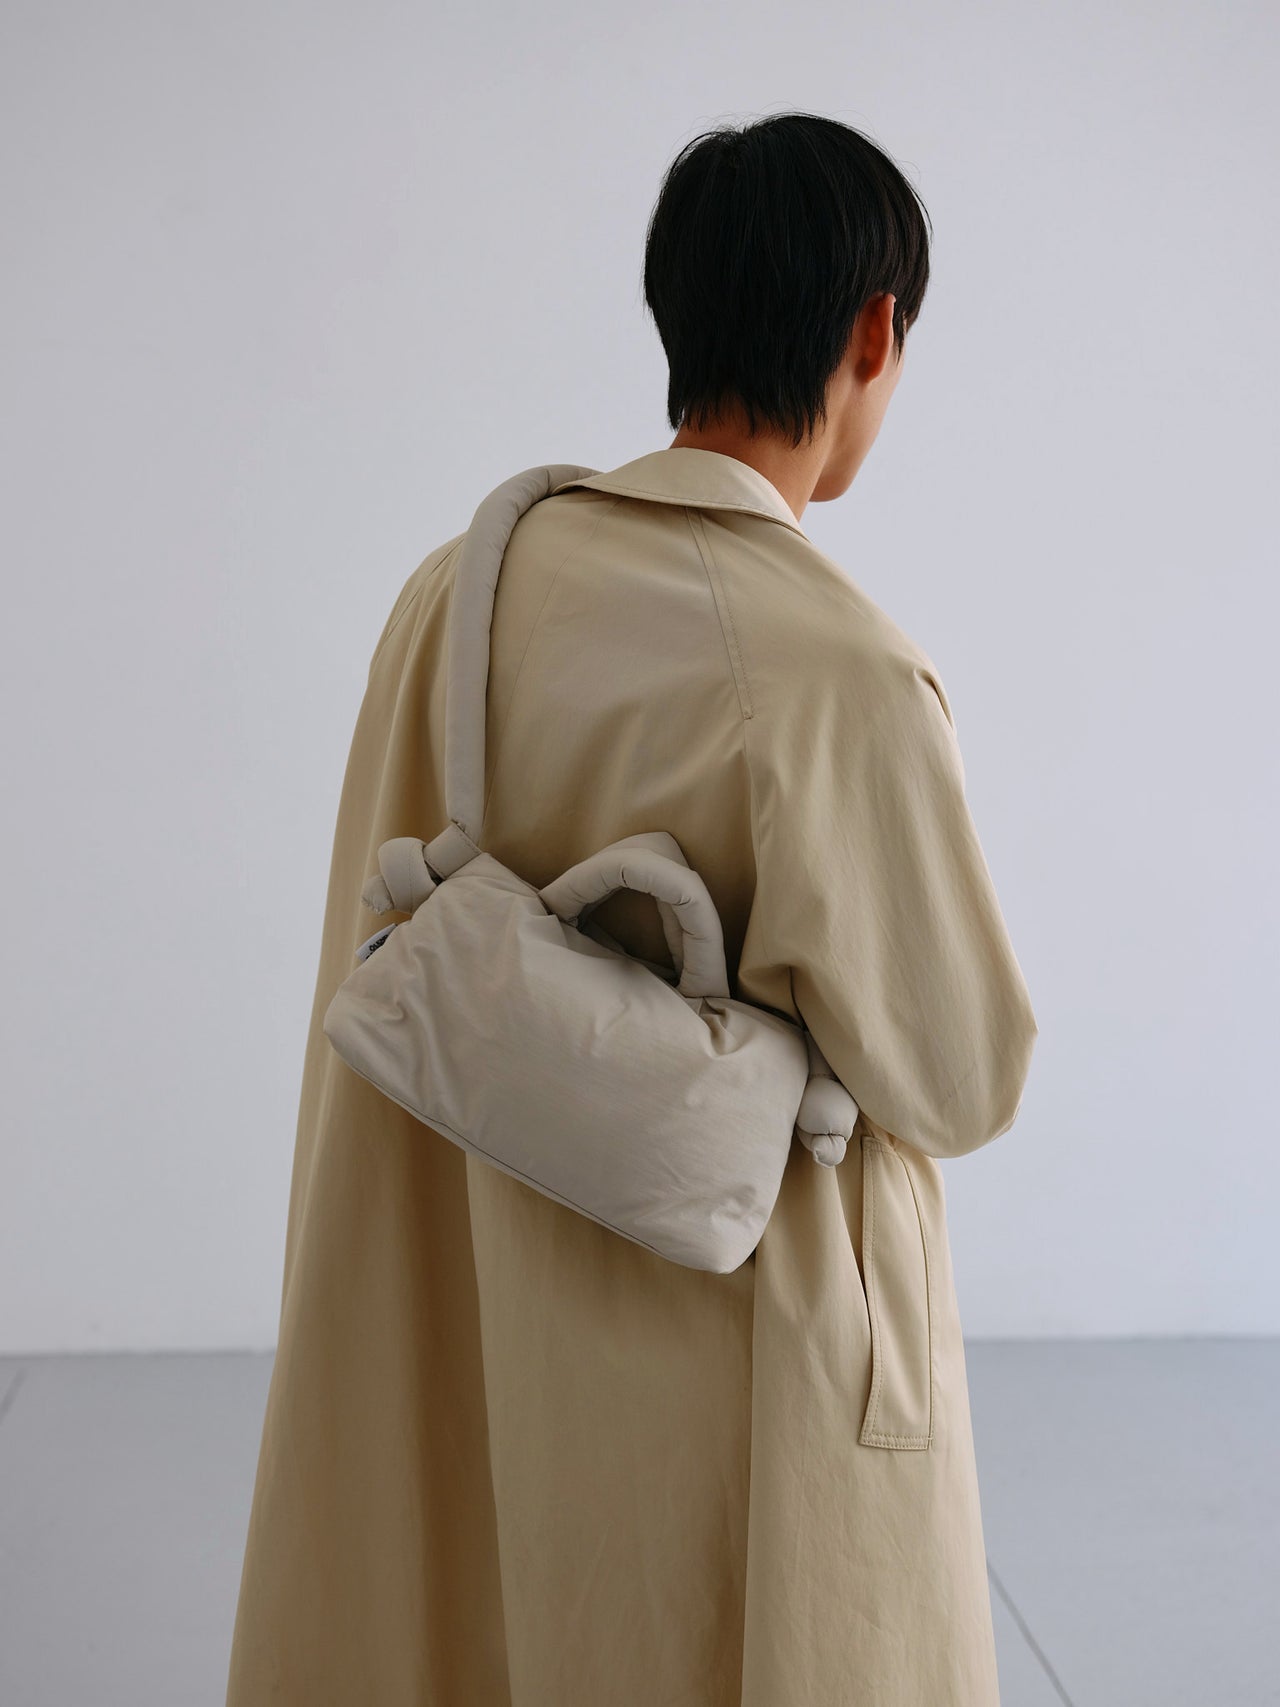 MiniOna Soft Bag